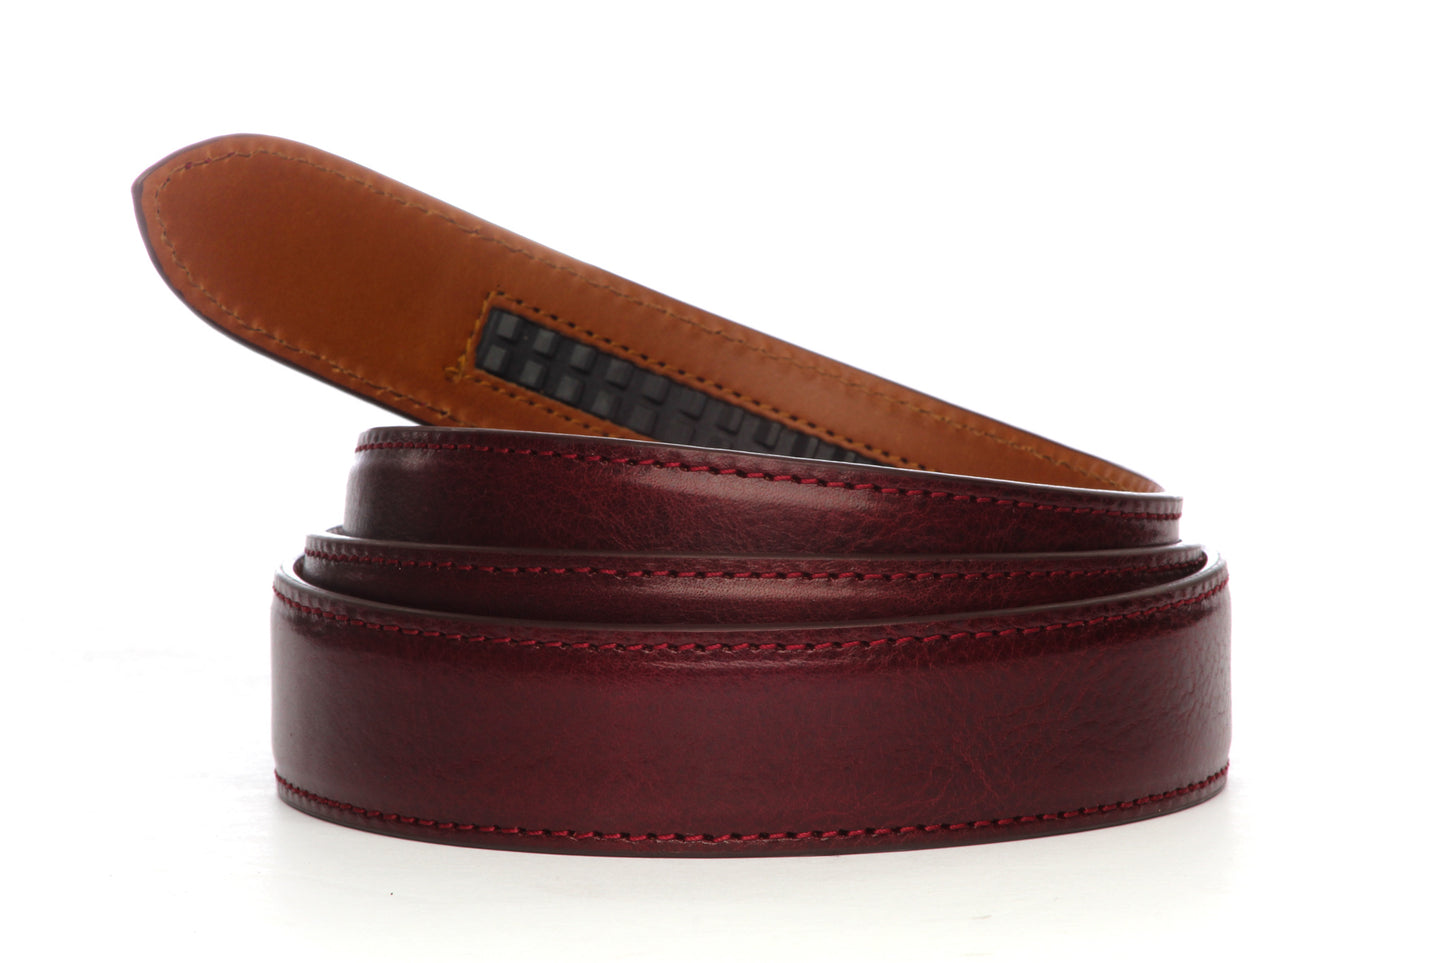 Men's Italian calfskin belt strap in merlot with a 1.25-inch width, formal look, back stitching